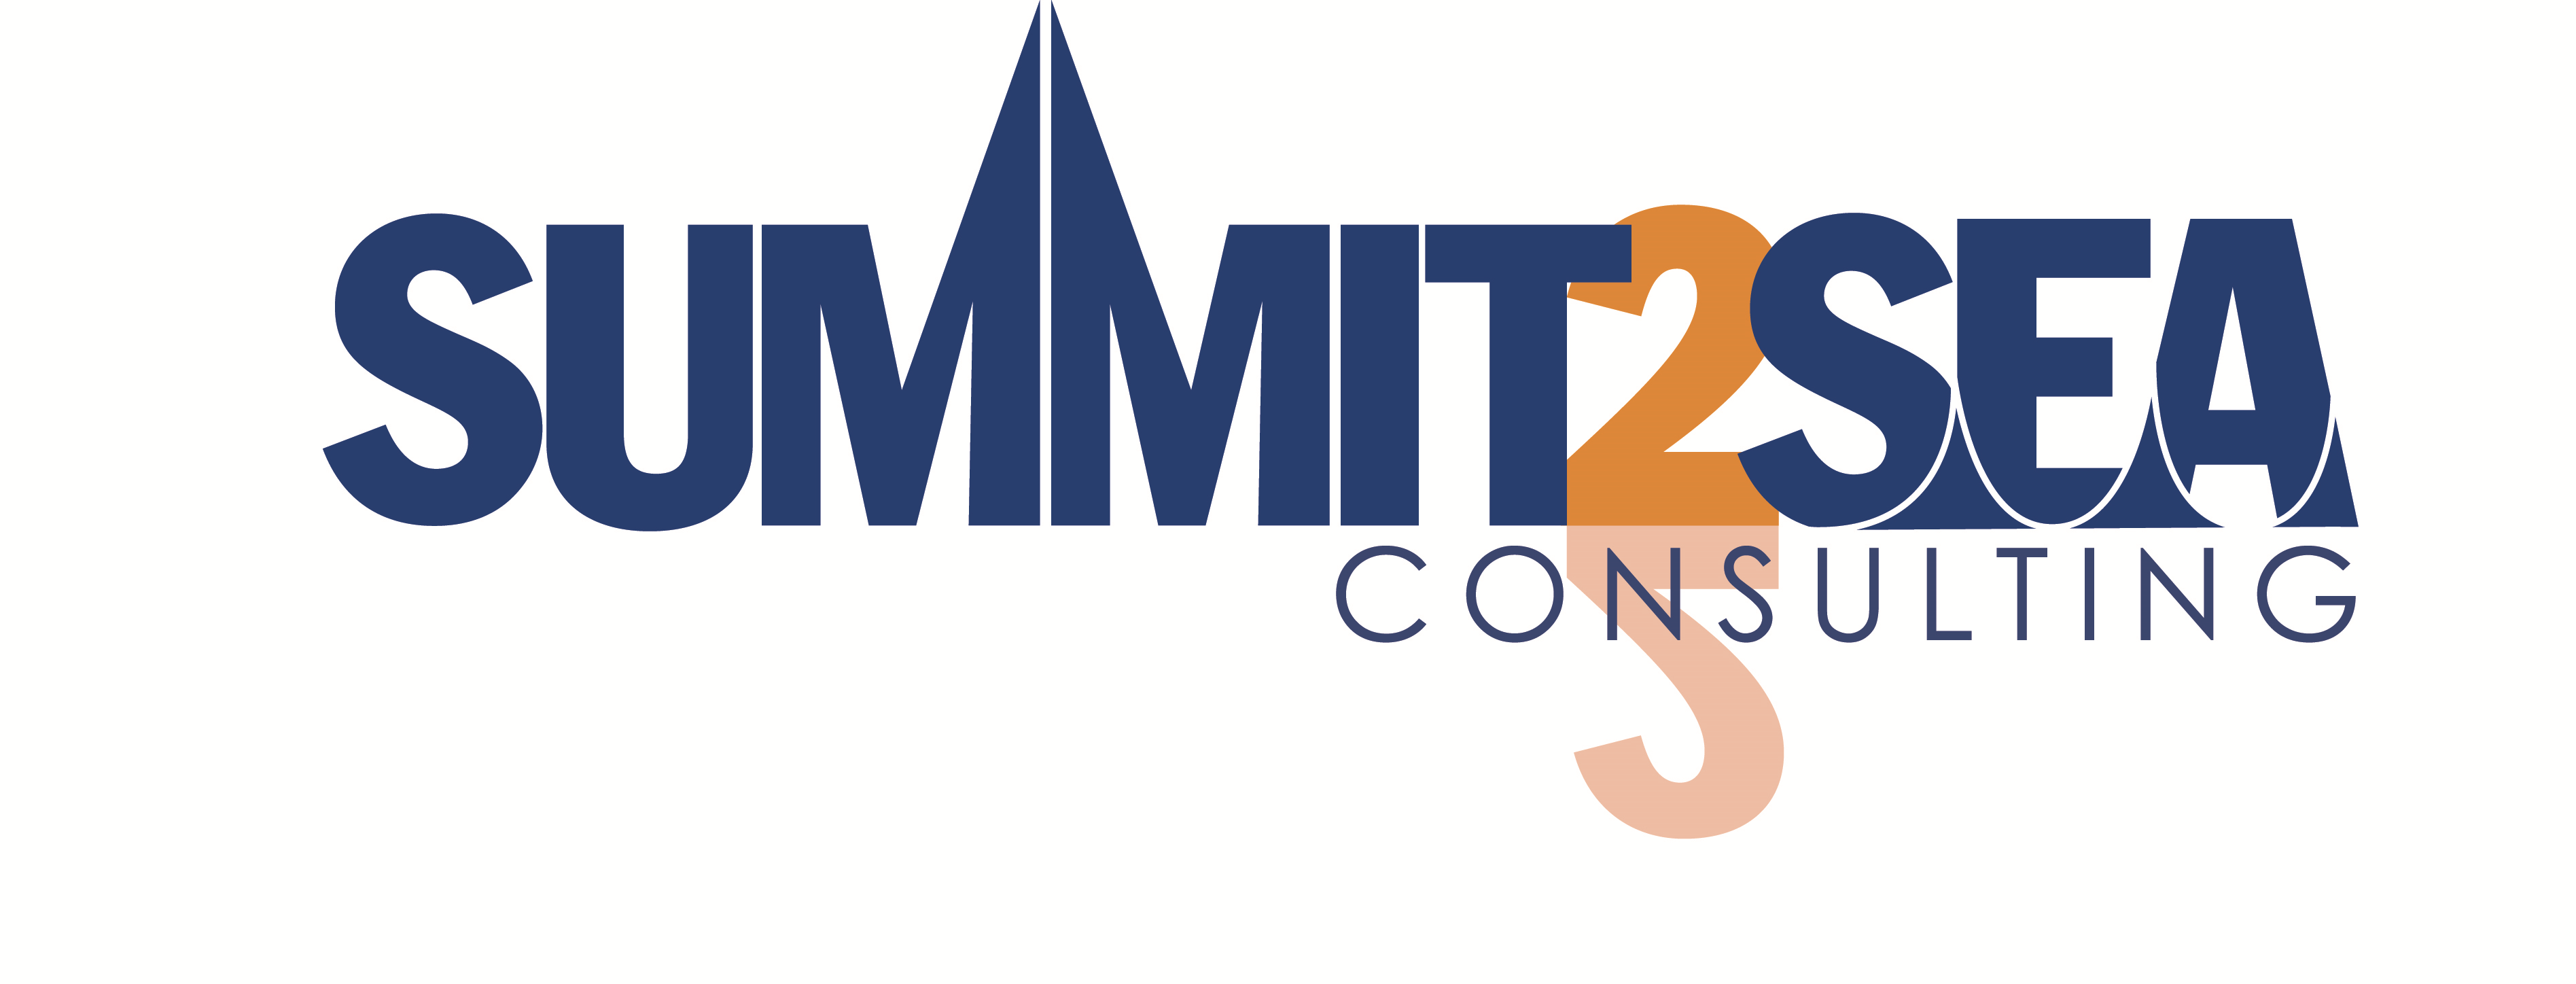 Summit2Sea Consulting, LLC Company Logo